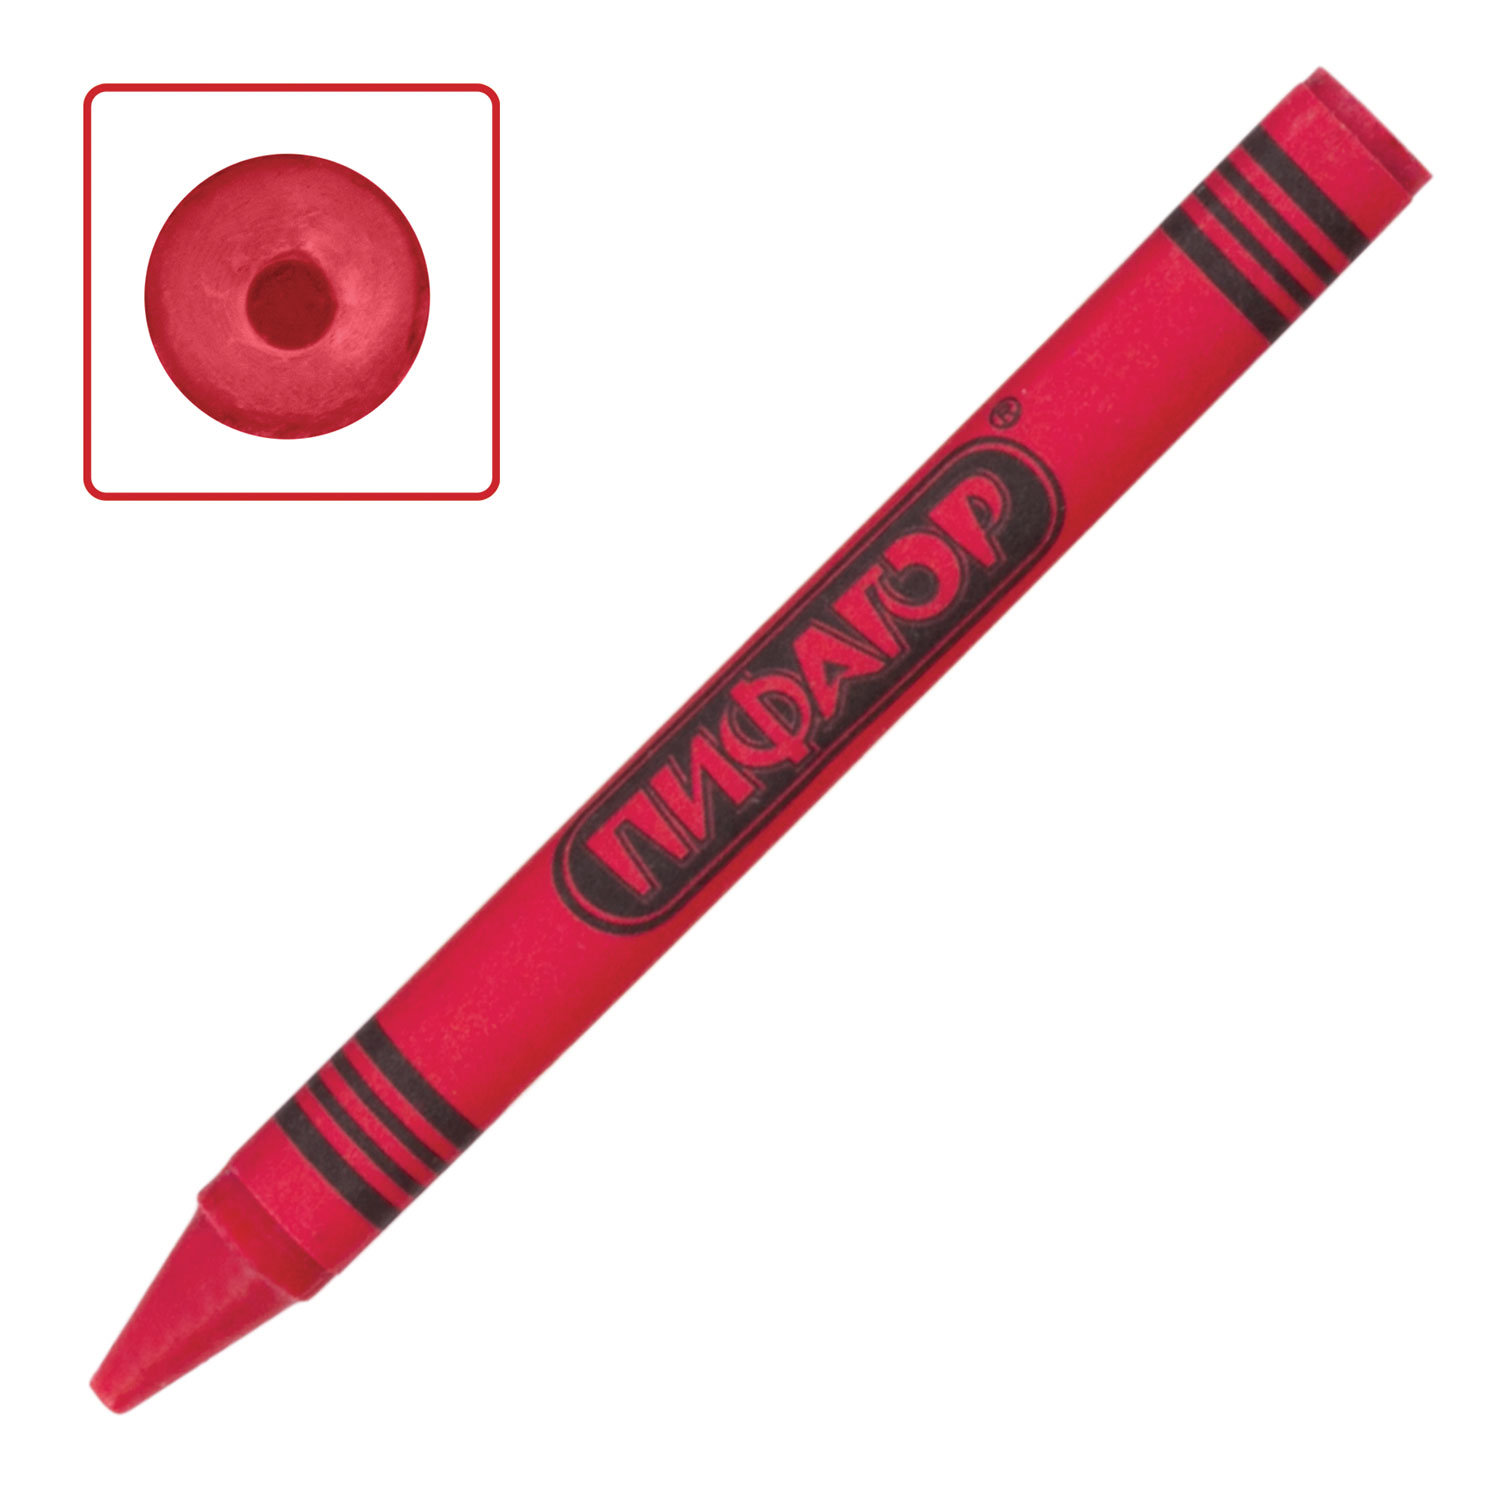 Восковые мелки Пифагор карандаши для рисования набор 24 цвета - фото 4